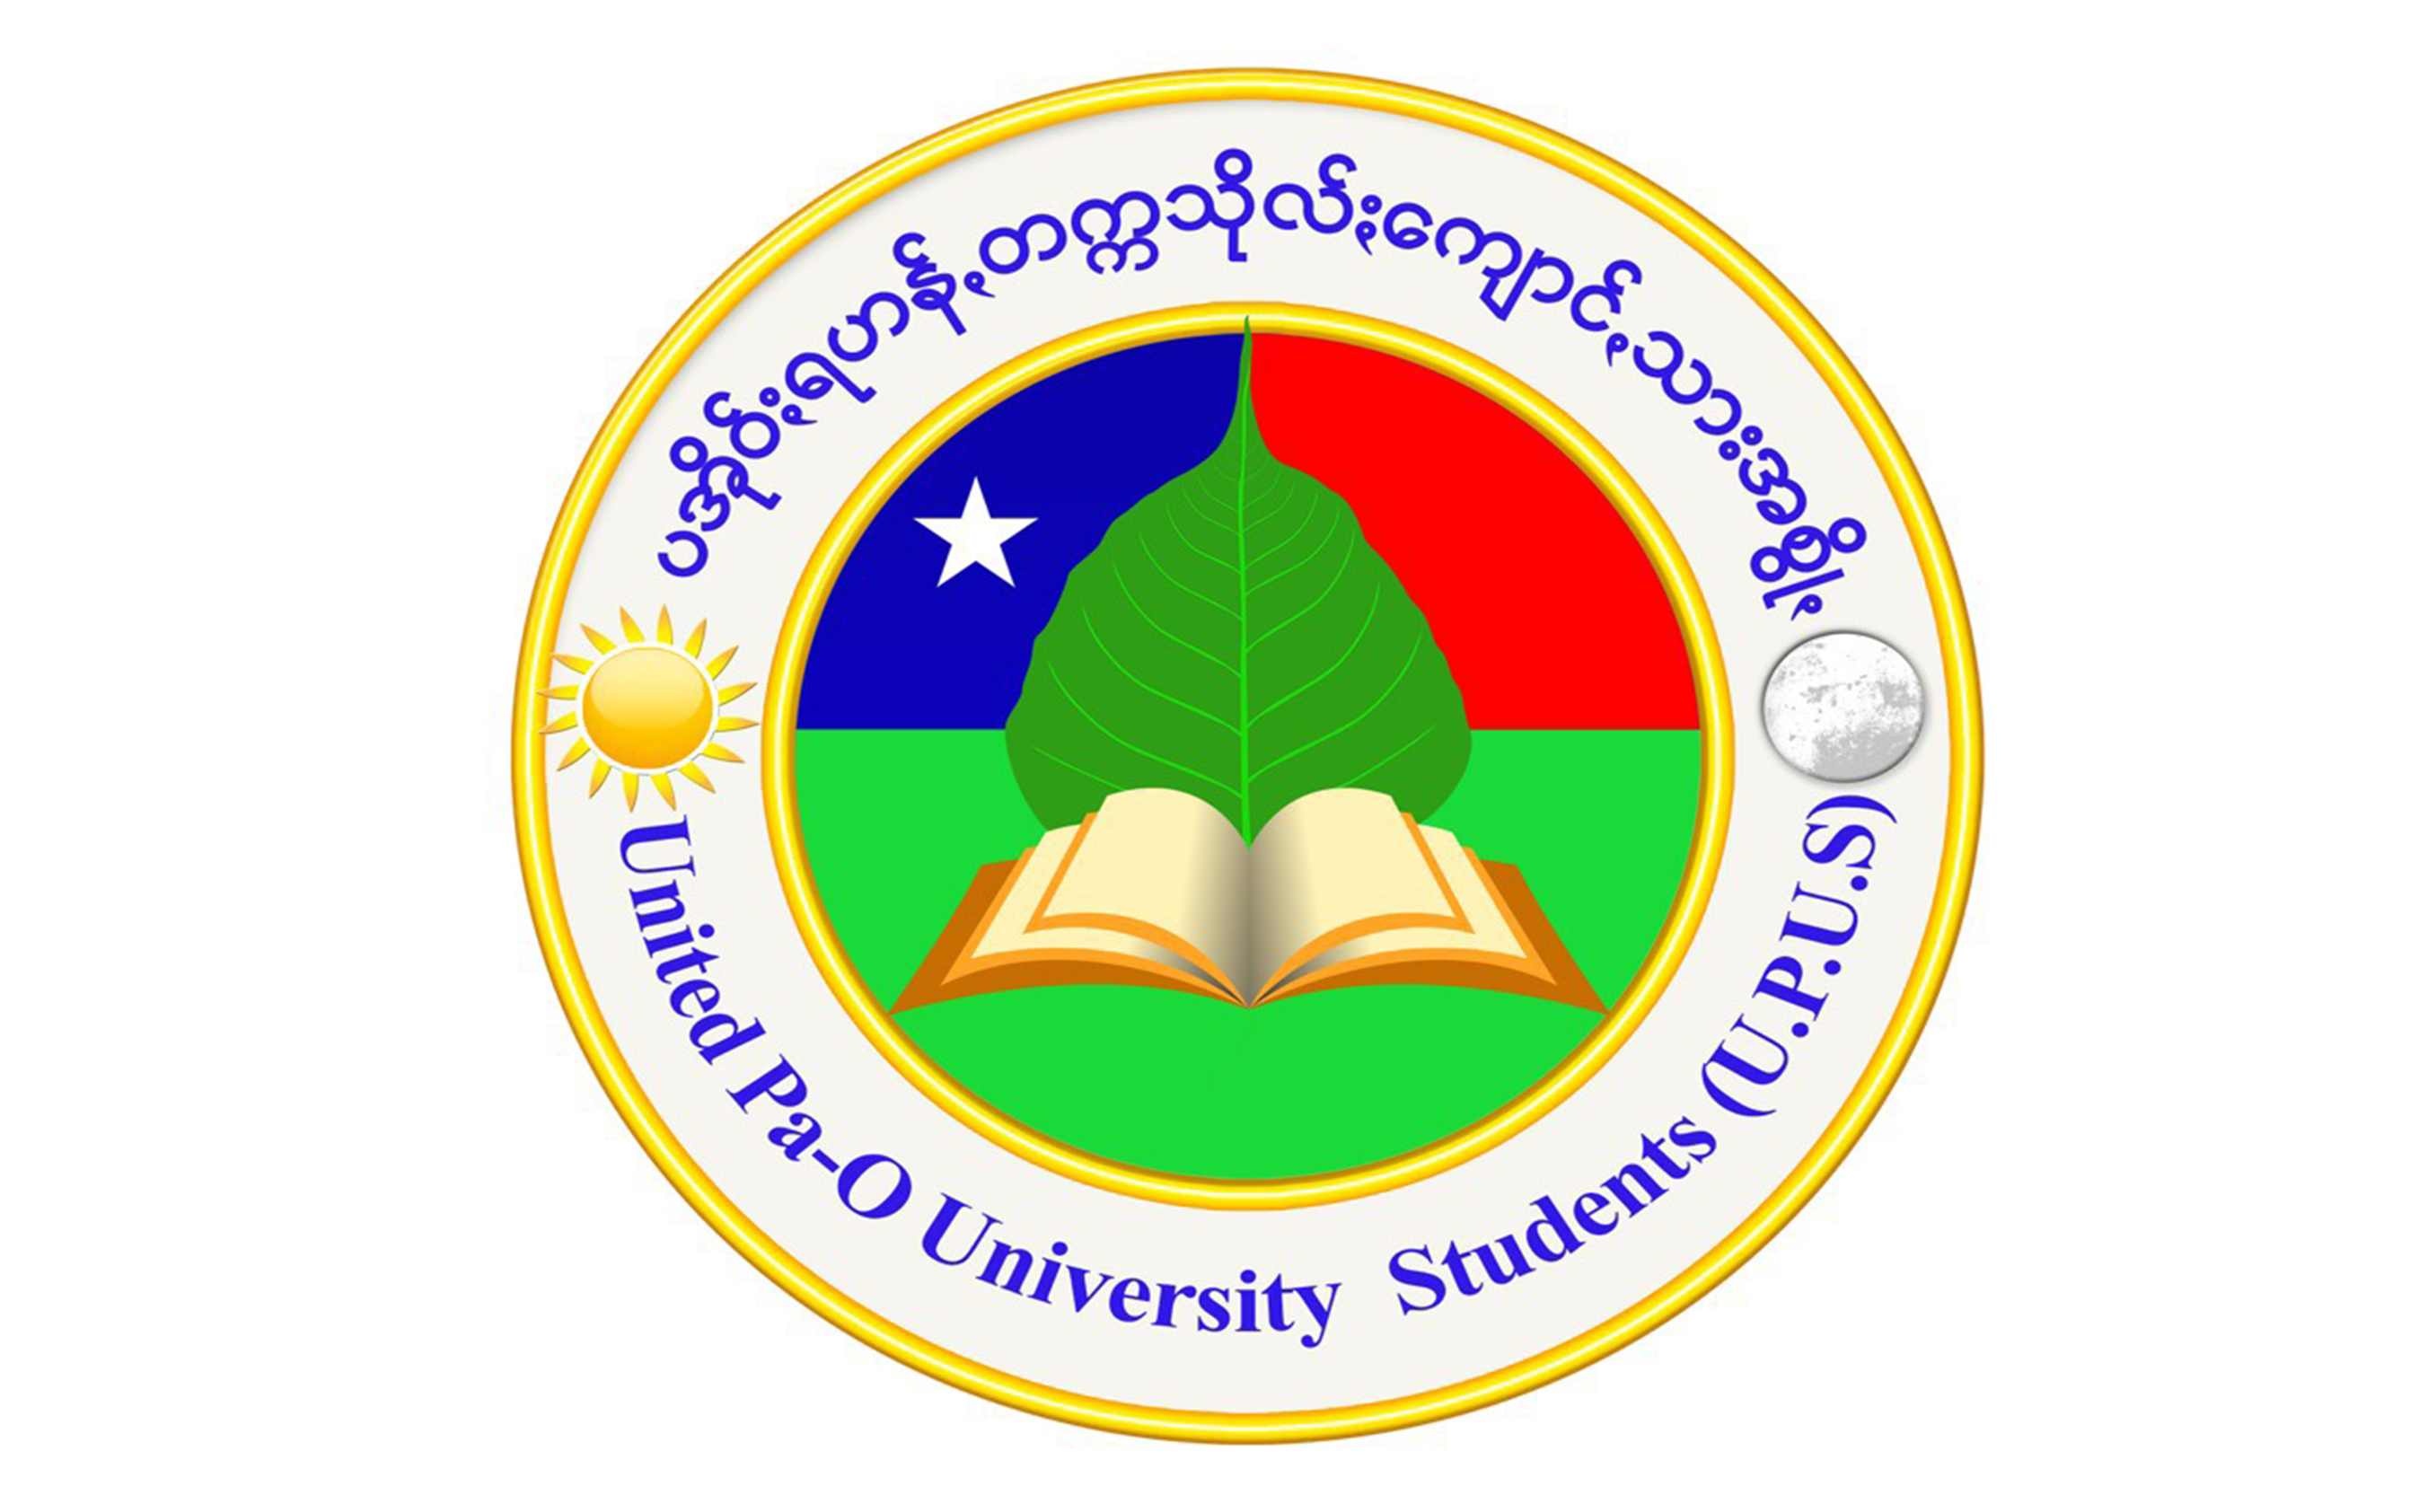 United Pa-O University Student (UPUS)